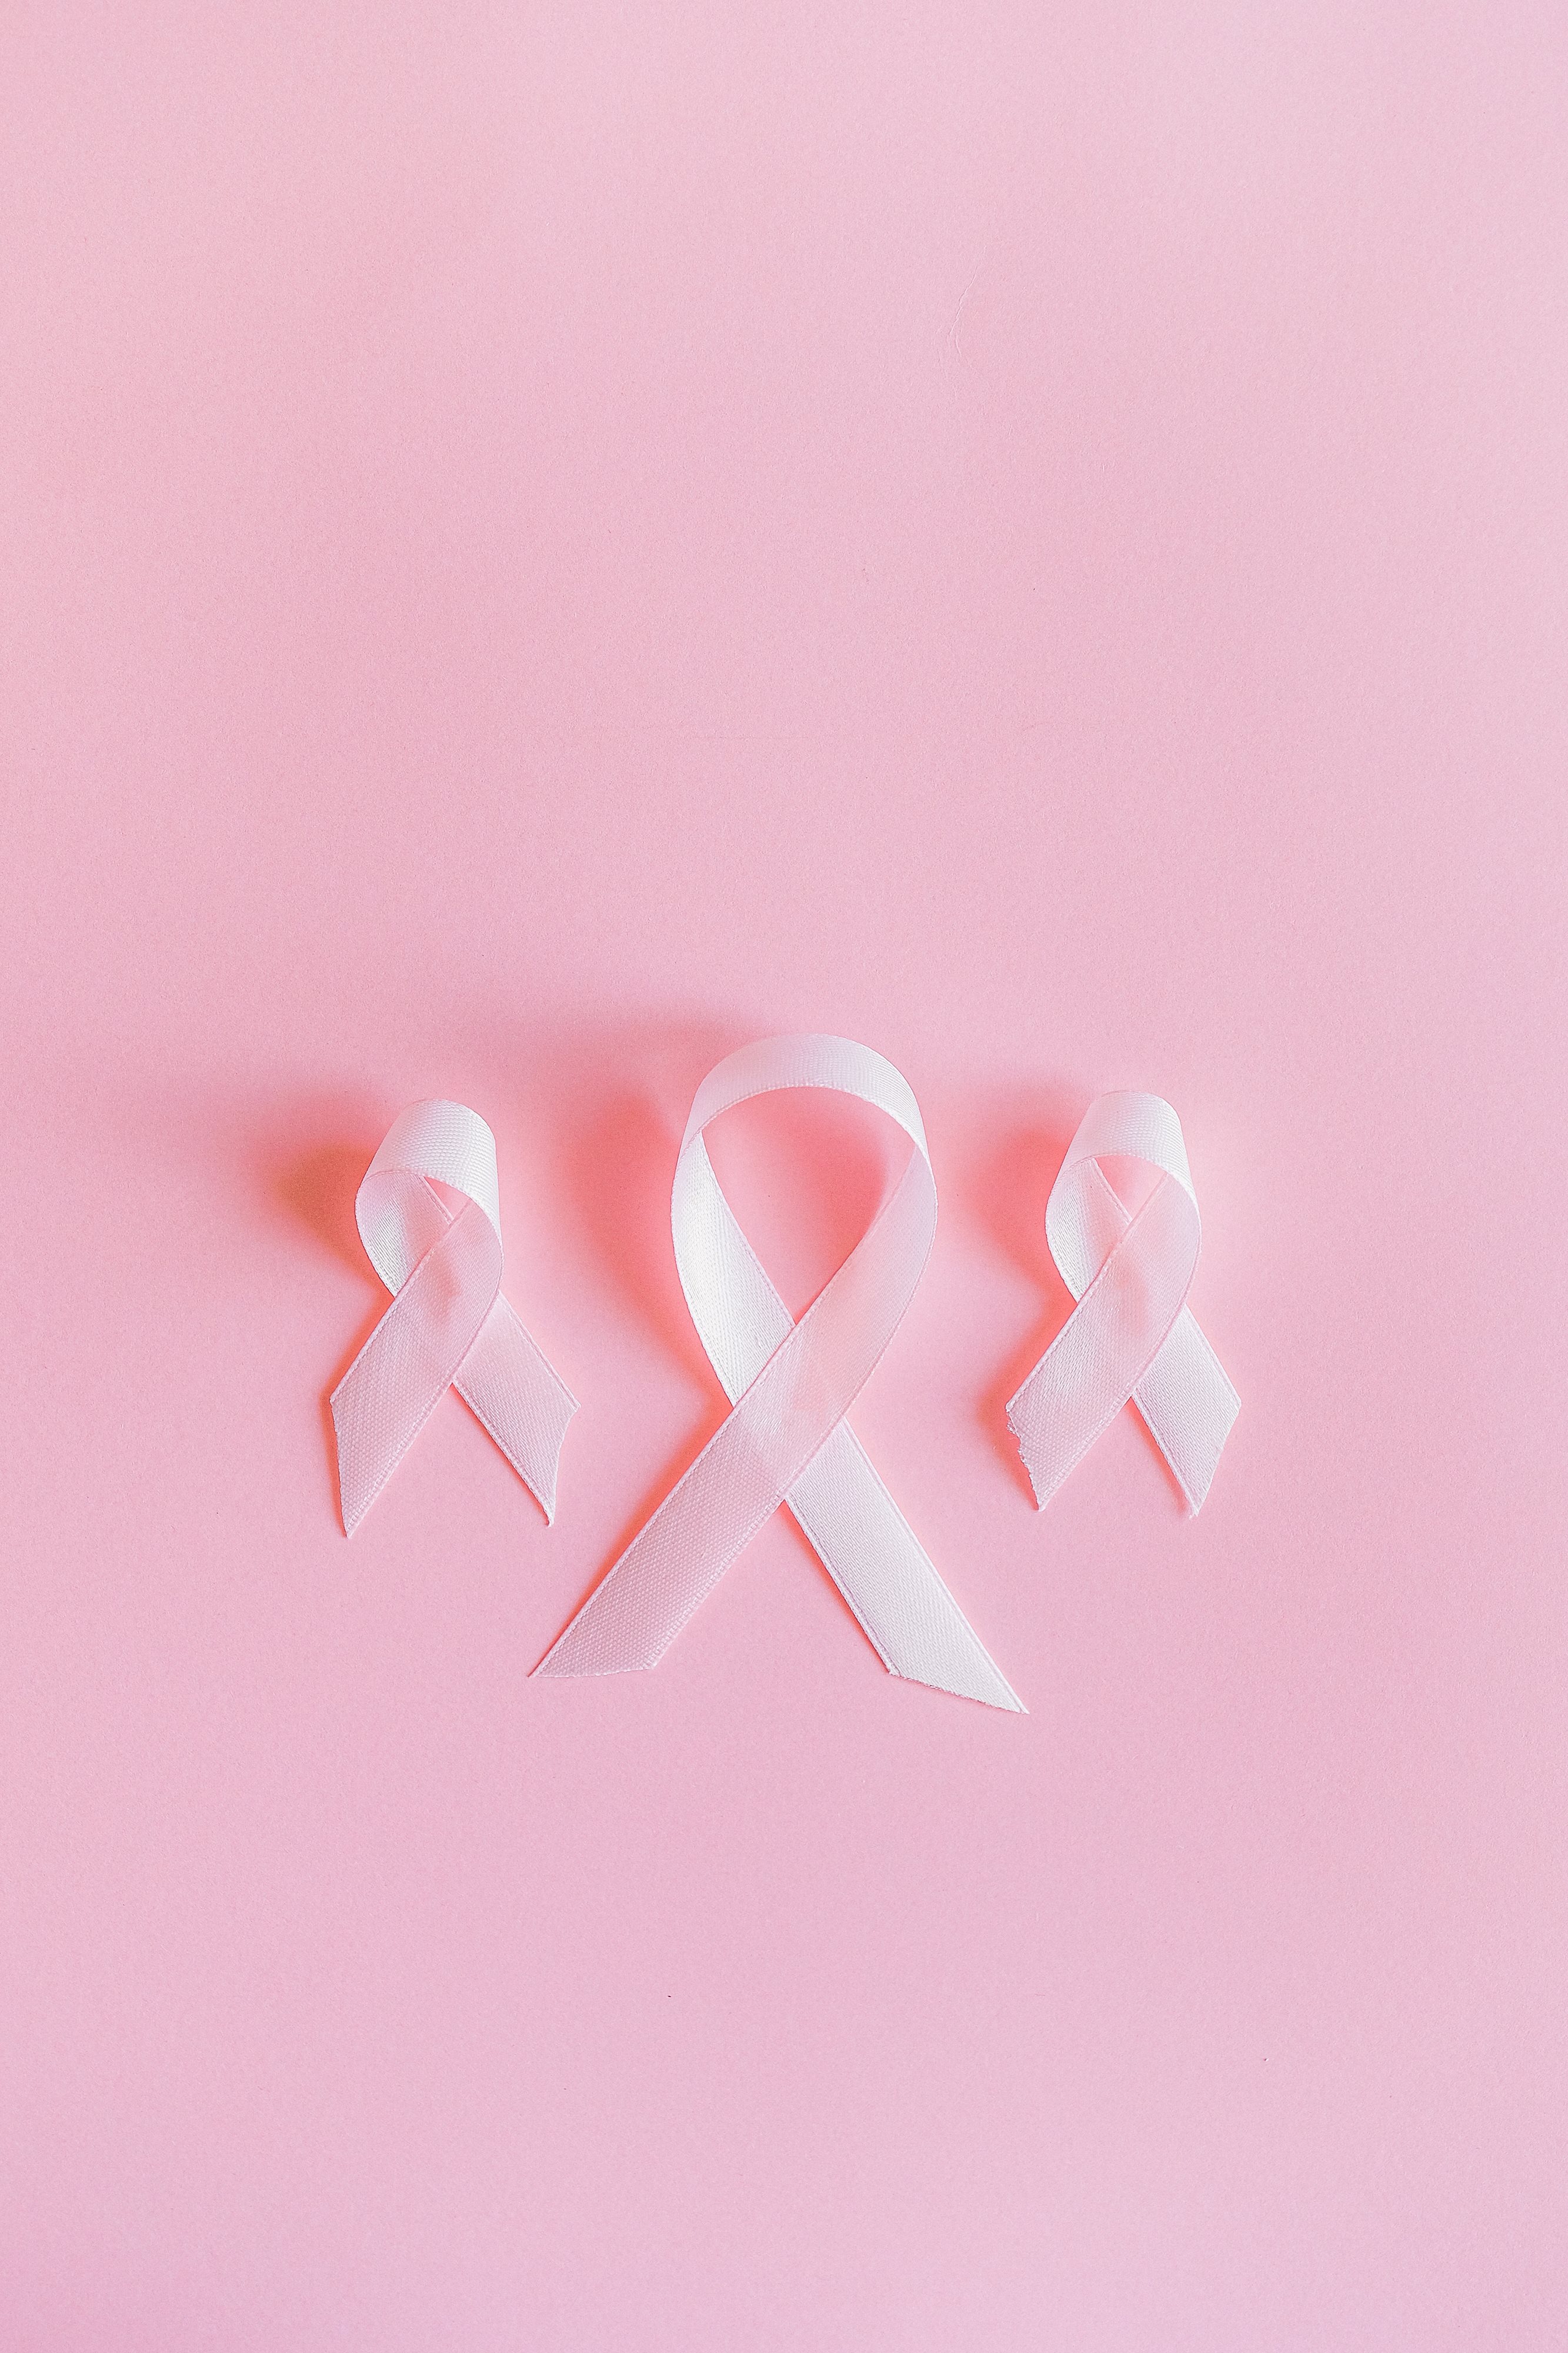 Breast Cancer Bracelets in Stores vs. Online